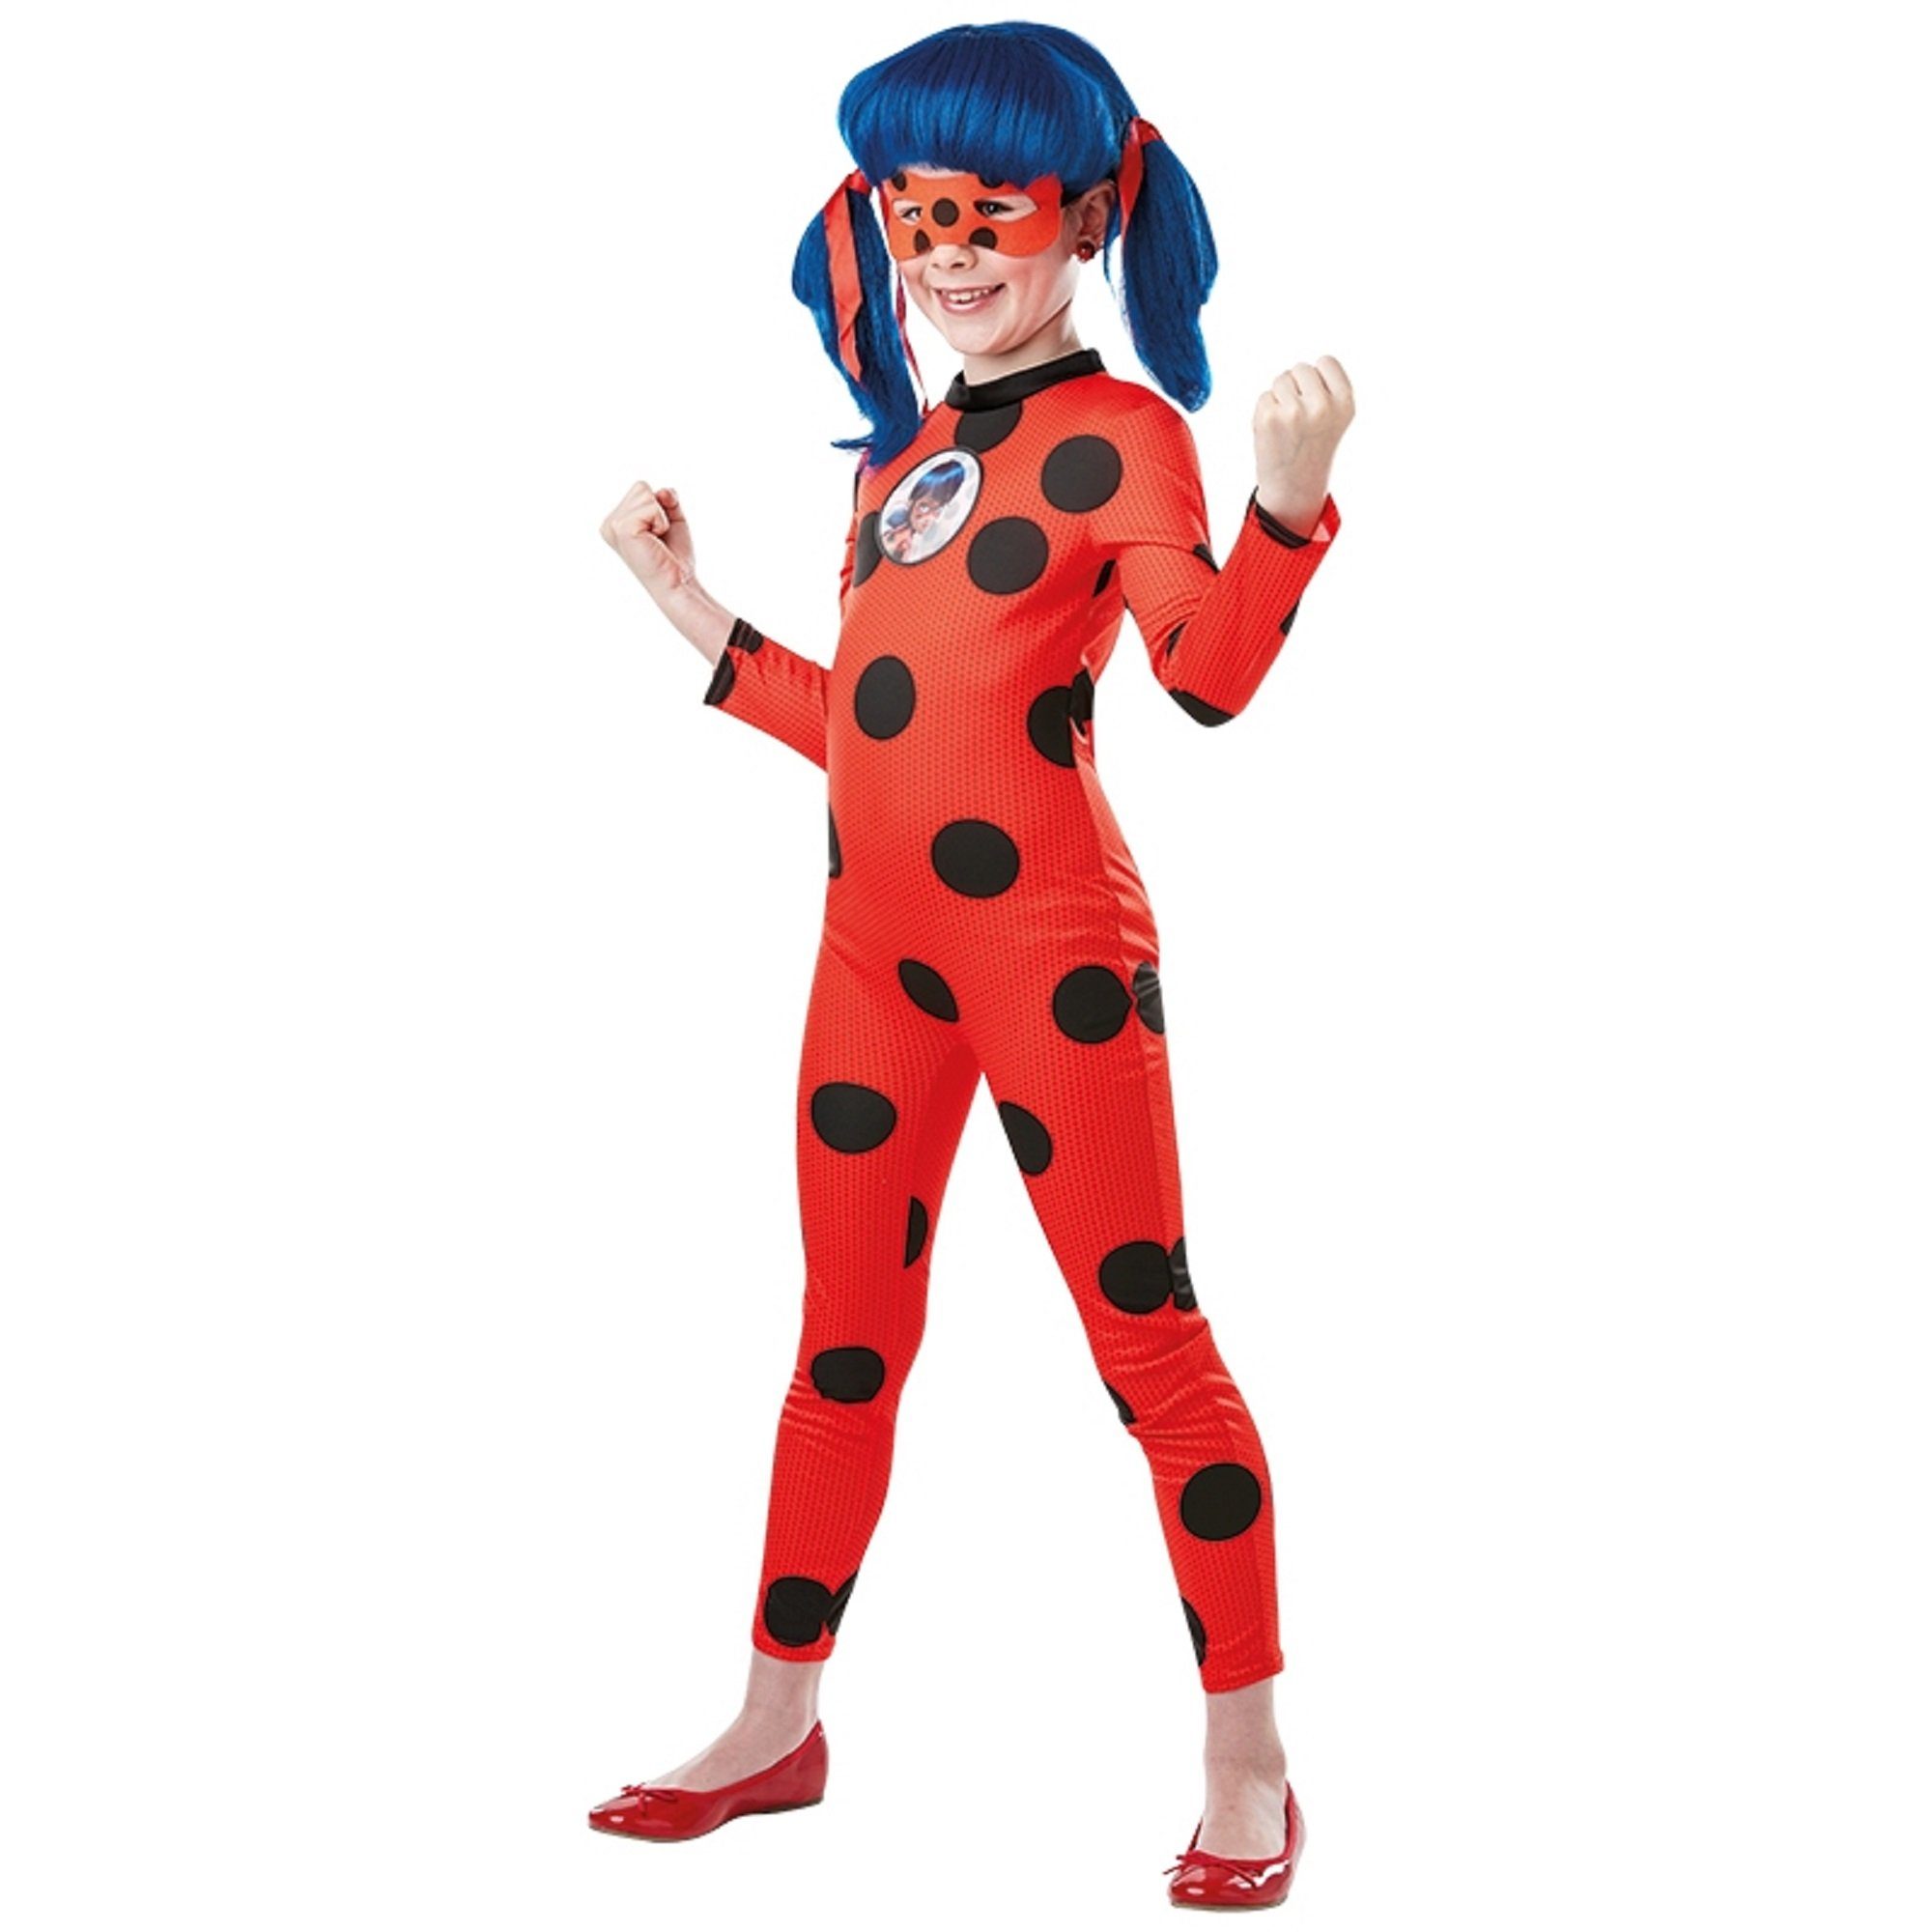 Miraculous - Ladybug Kostüm, Kinder Kostüm online kaufen | OTTO